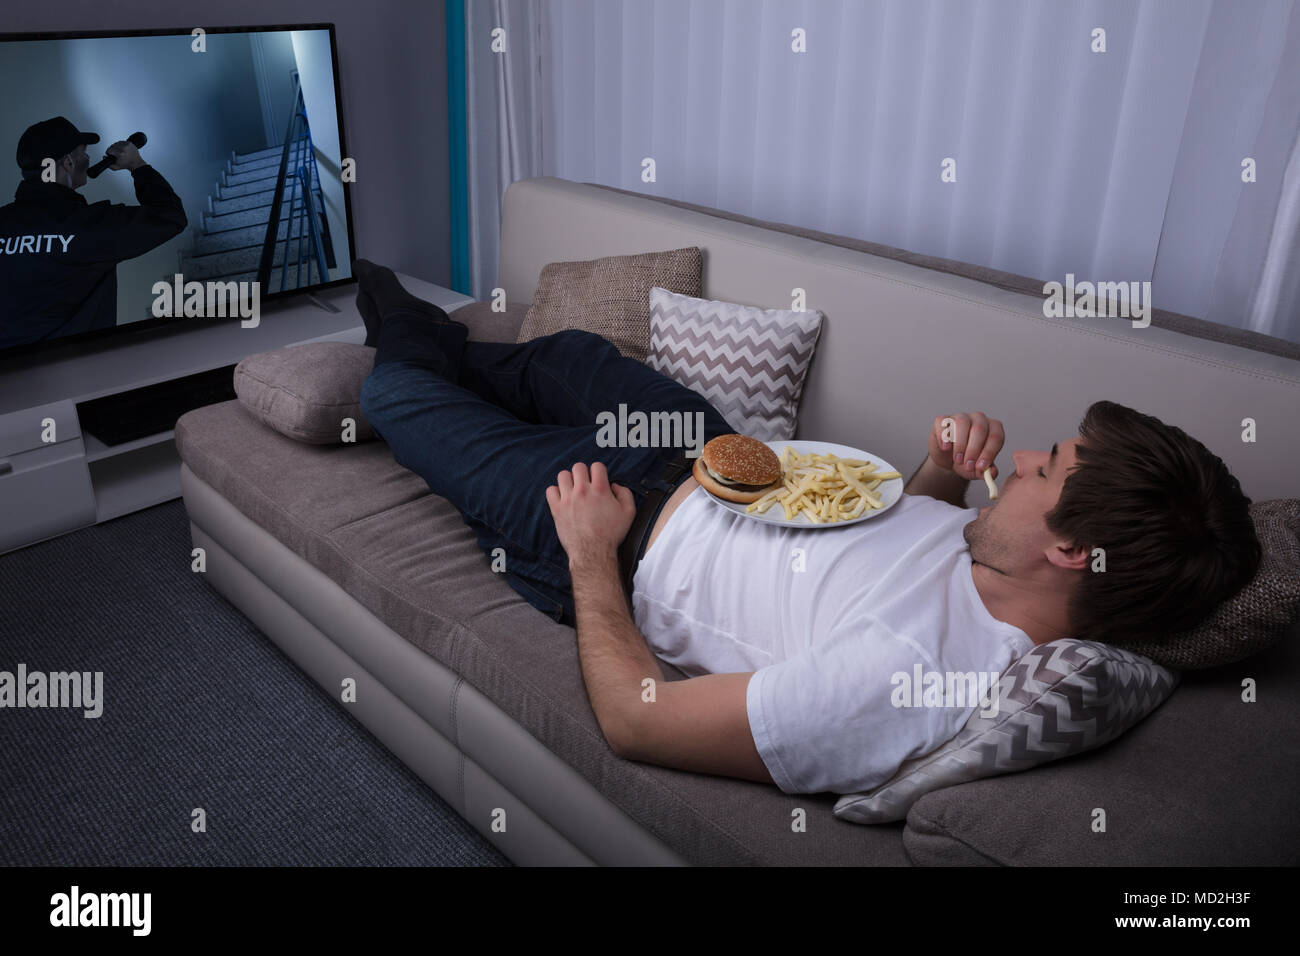 Man Burger Sofa High Resolution Stock Photography and Images - Alamy